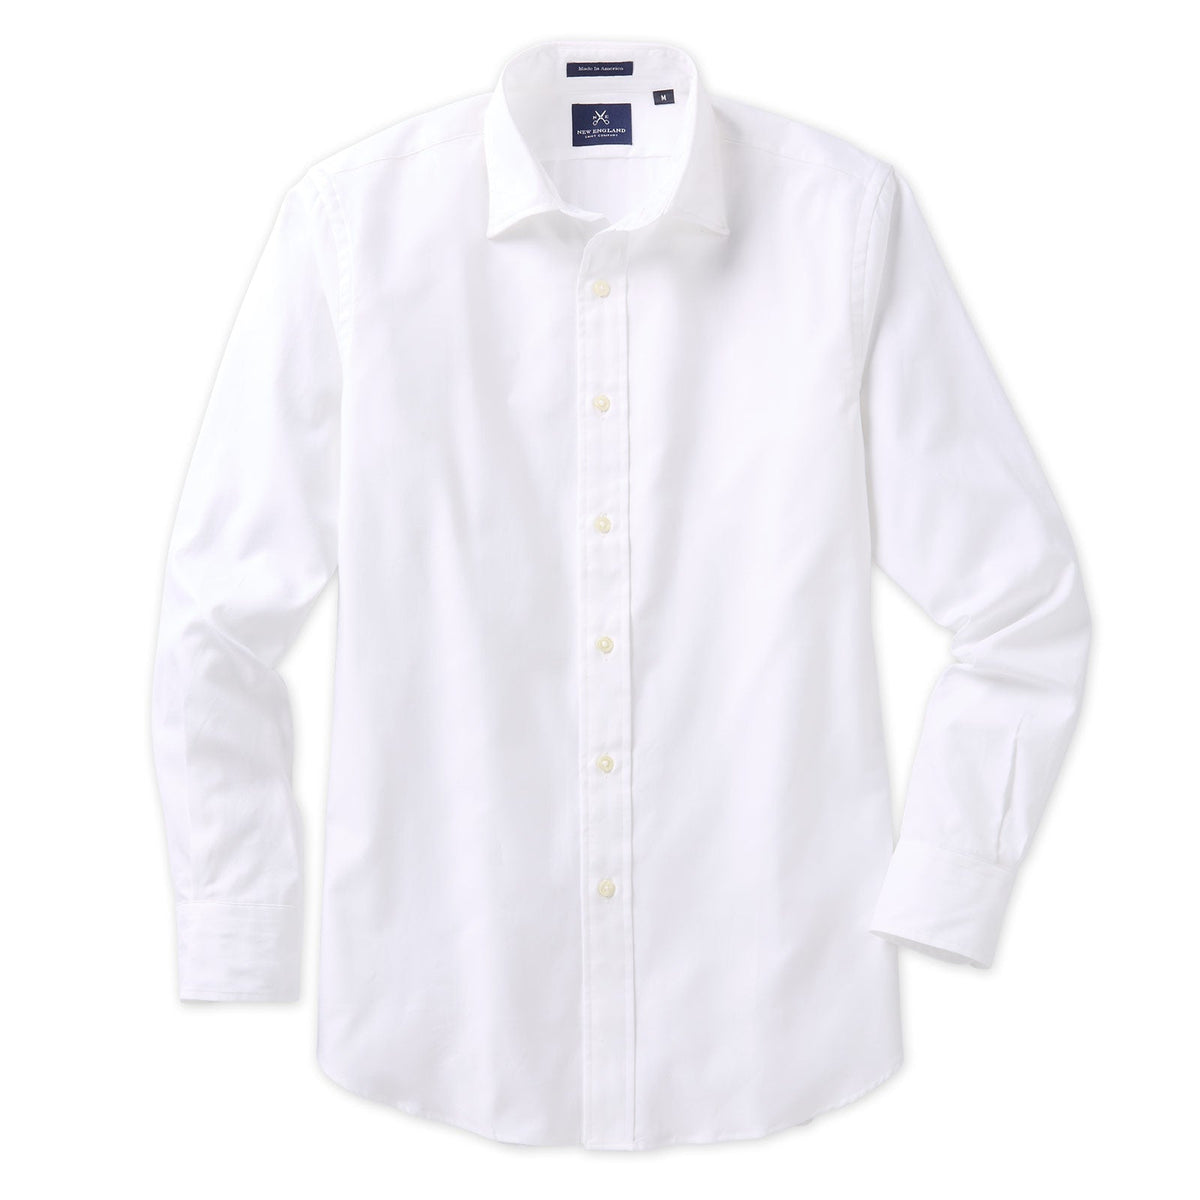 Weston Spread Collar White Oxford Sport Shirt